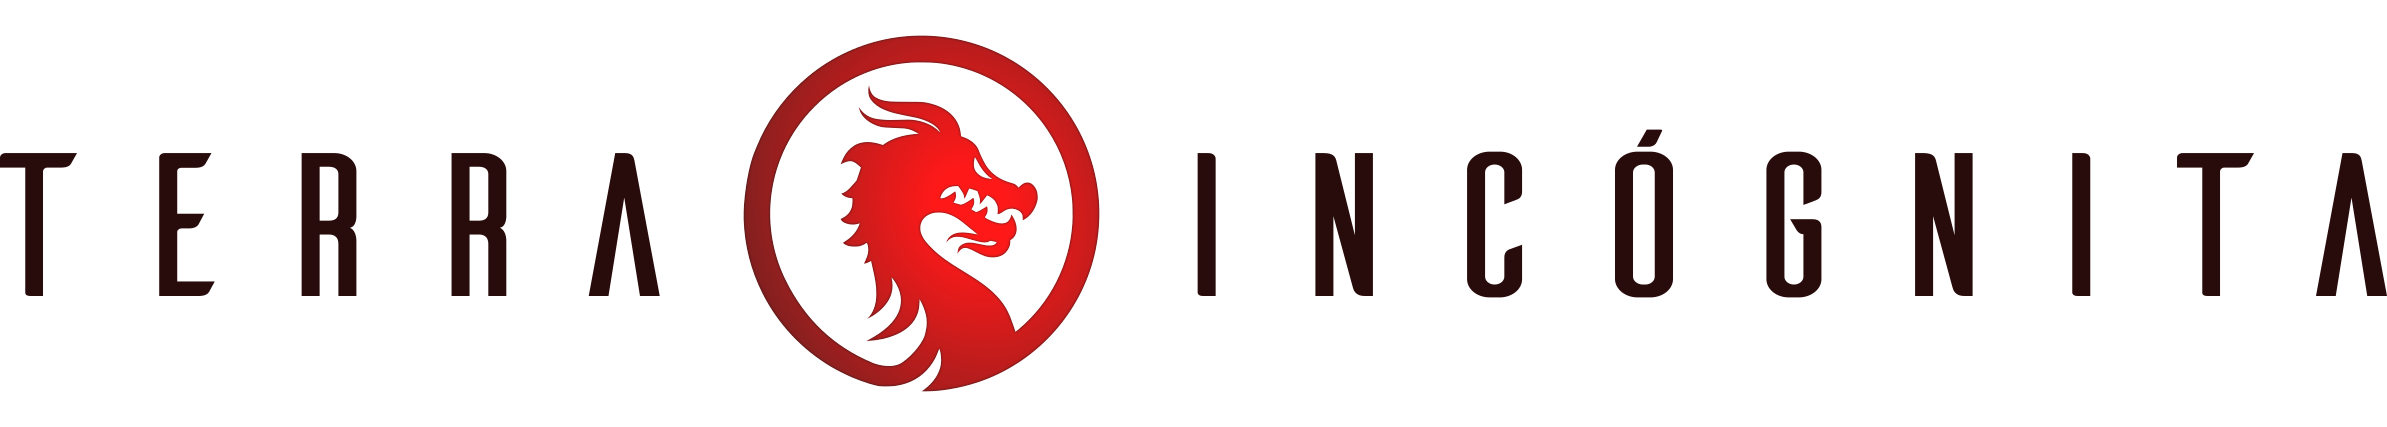 Logo Terra Incógnita